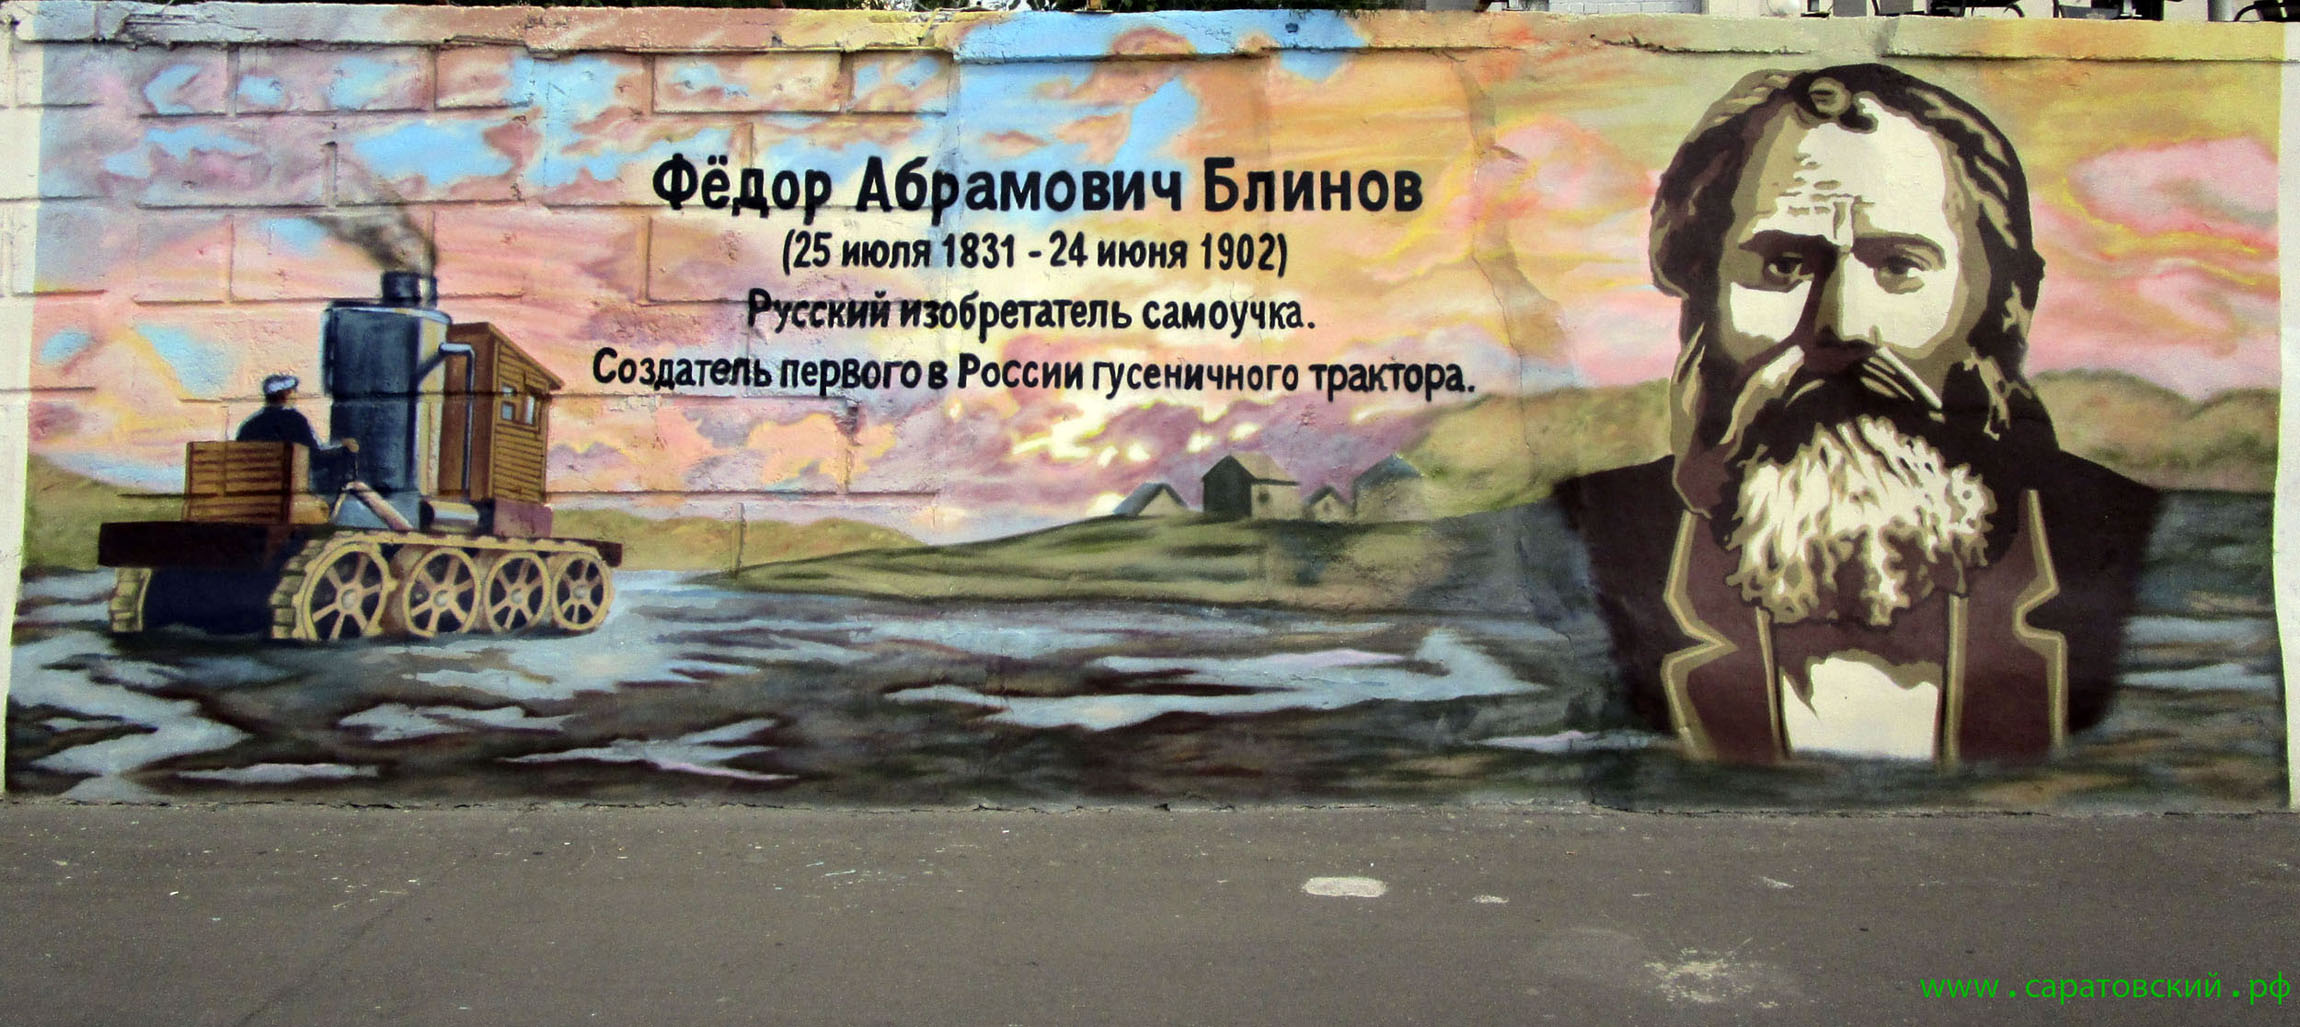 Набережная Саратова, граффити: Фёдор Абрамович Блинов и Саратов